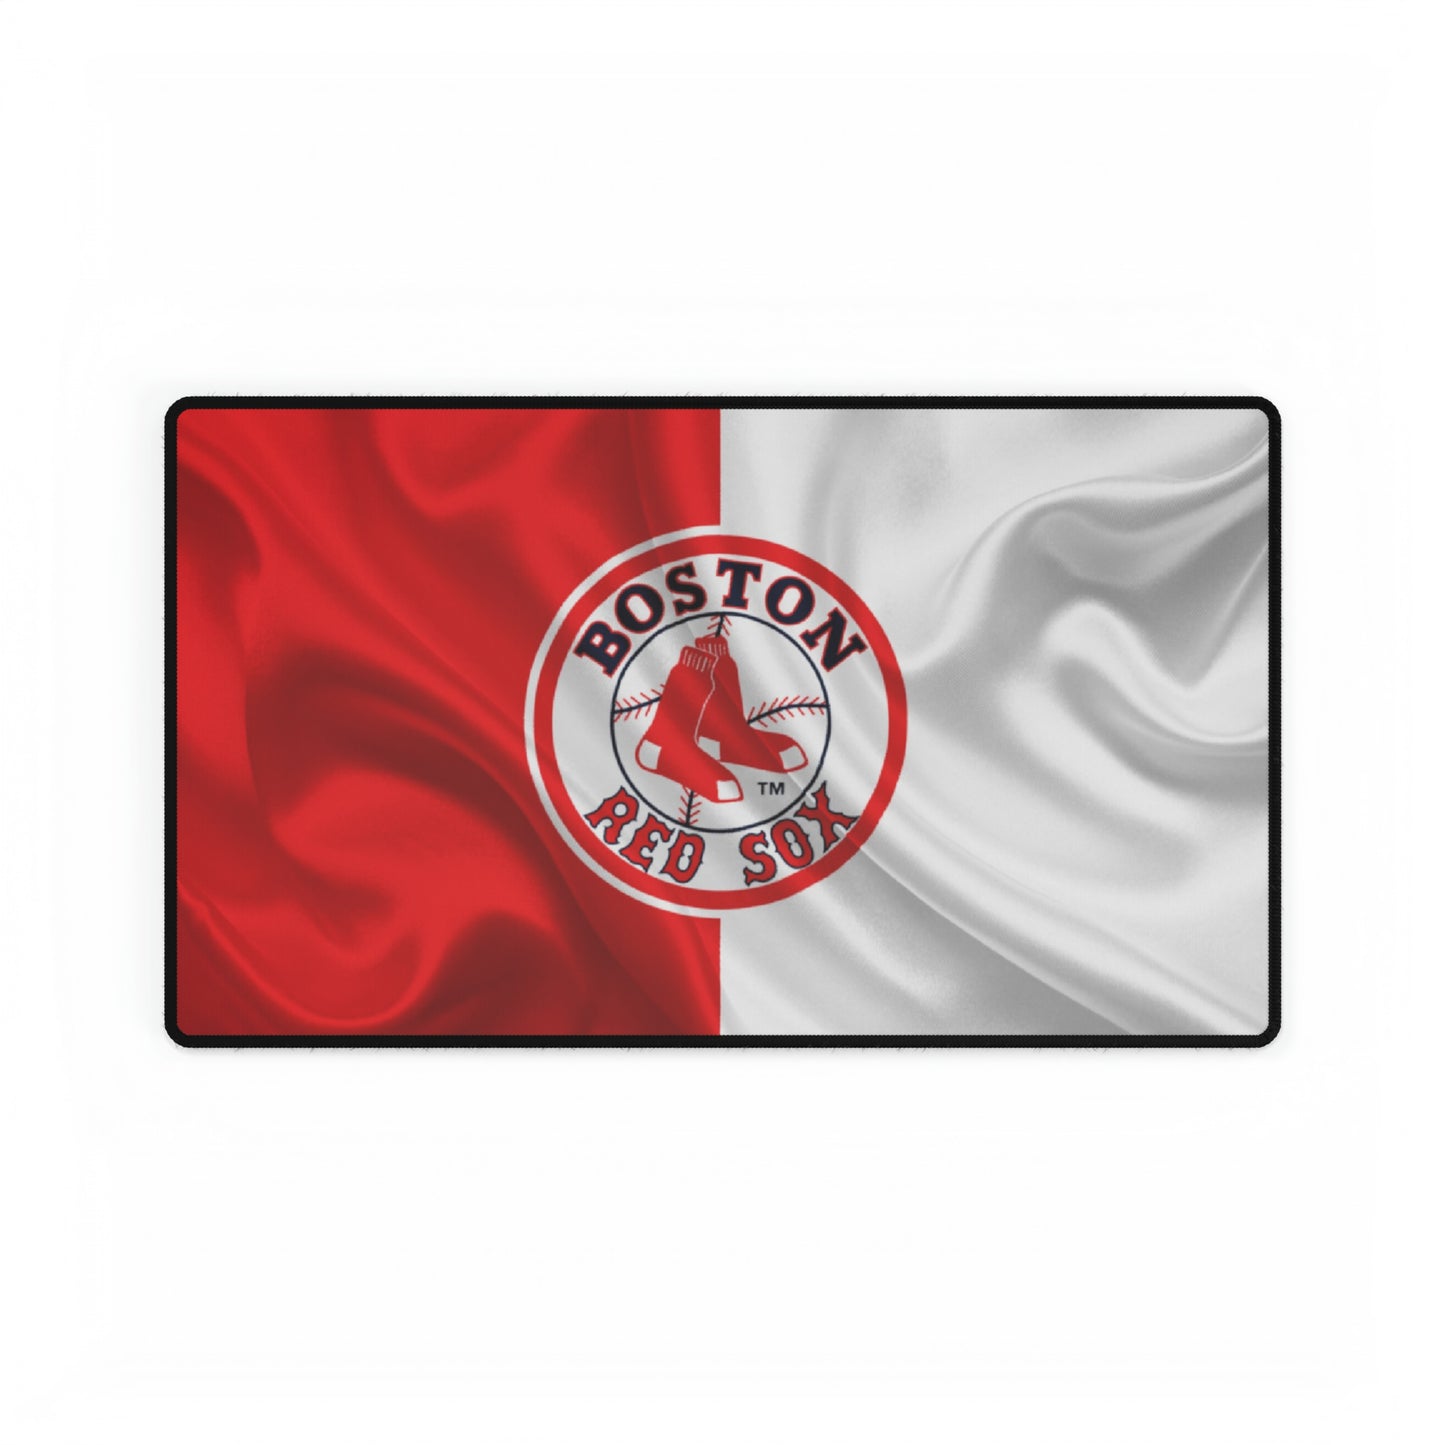 Boston Red Sox Wavy flag look MLB Baseball High Definition Desk Mat